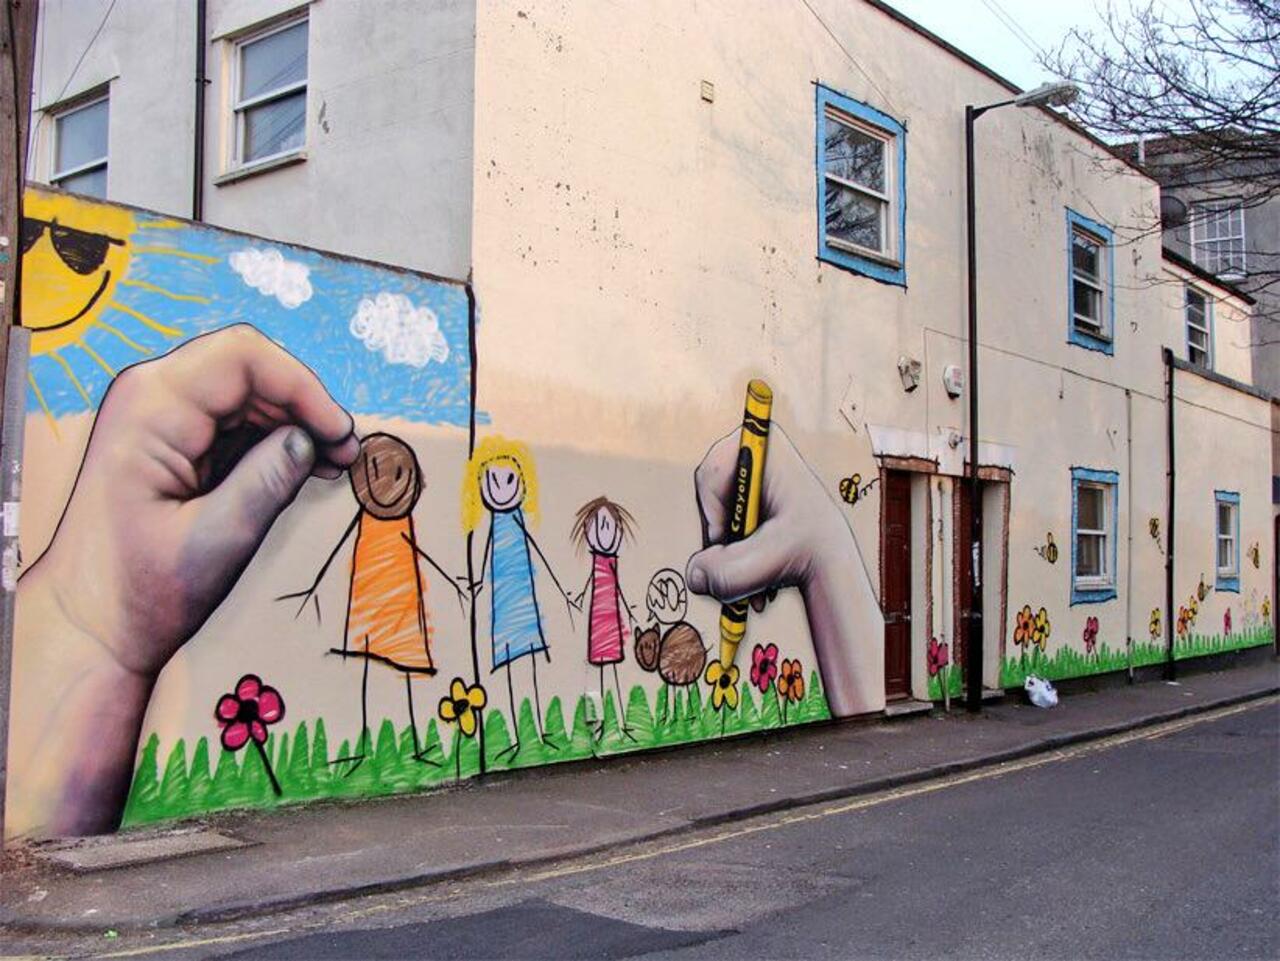 Done Ad
Bristol
#streetart #art #graffiti #mural http://t.co/xyksDNhXy7